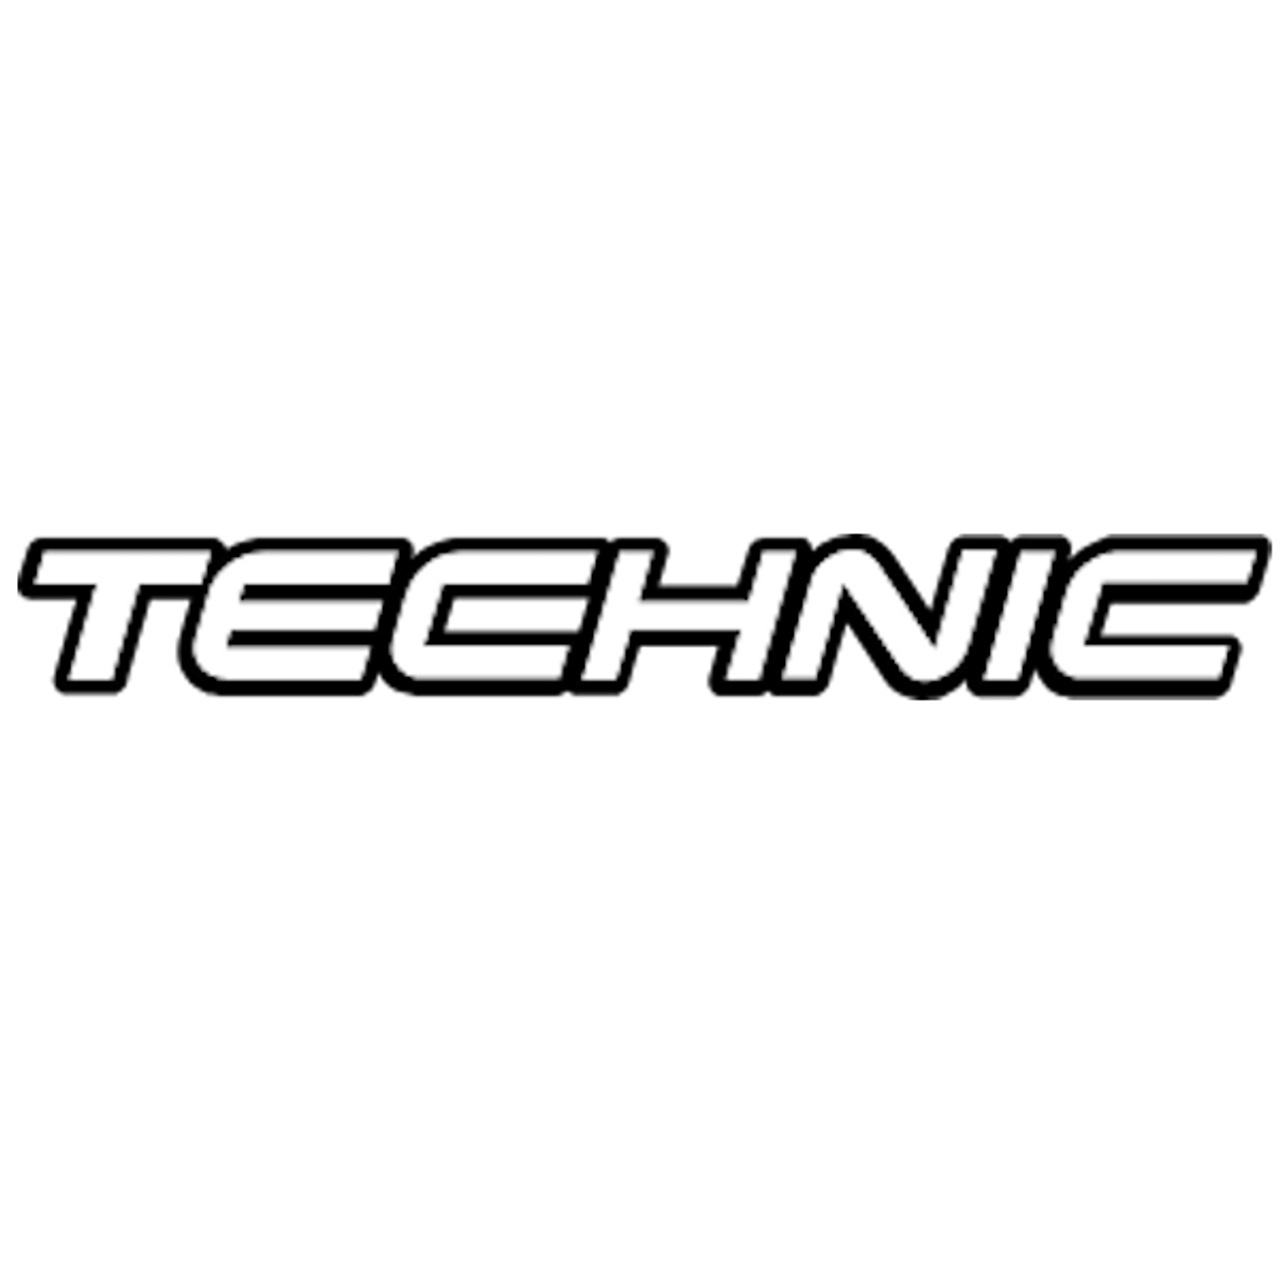 Technic